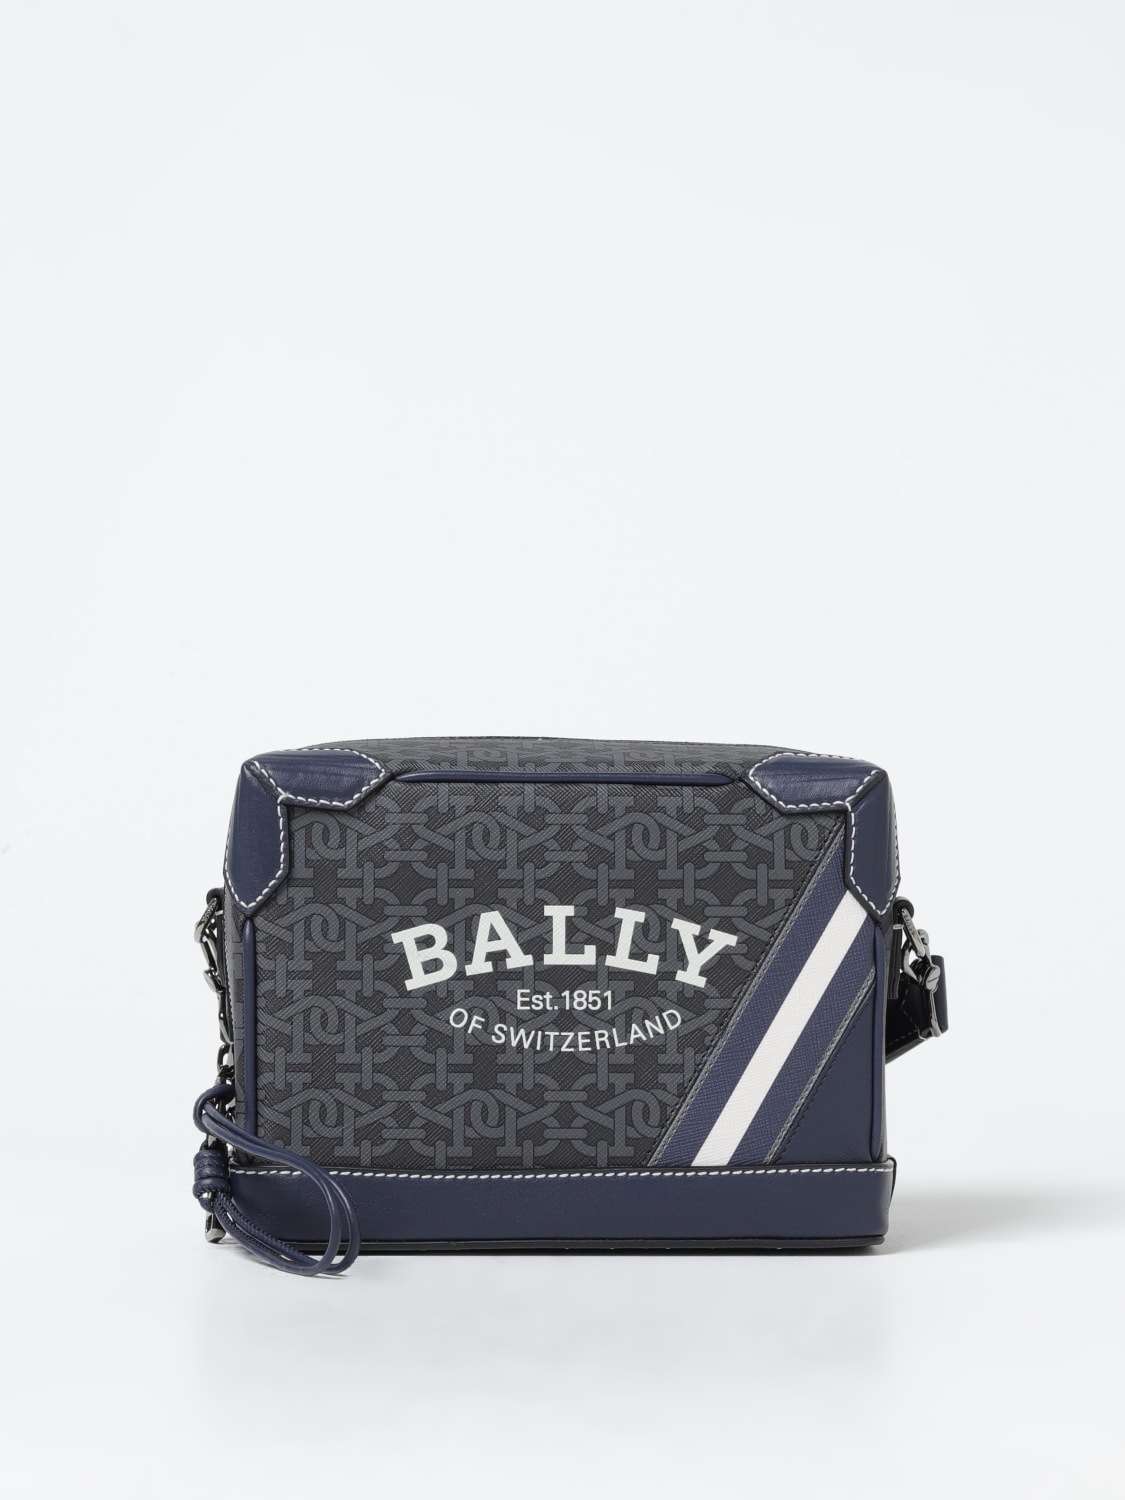 Bally of Switzerland Leather Messenger Crossbody Bag - Women's handbags